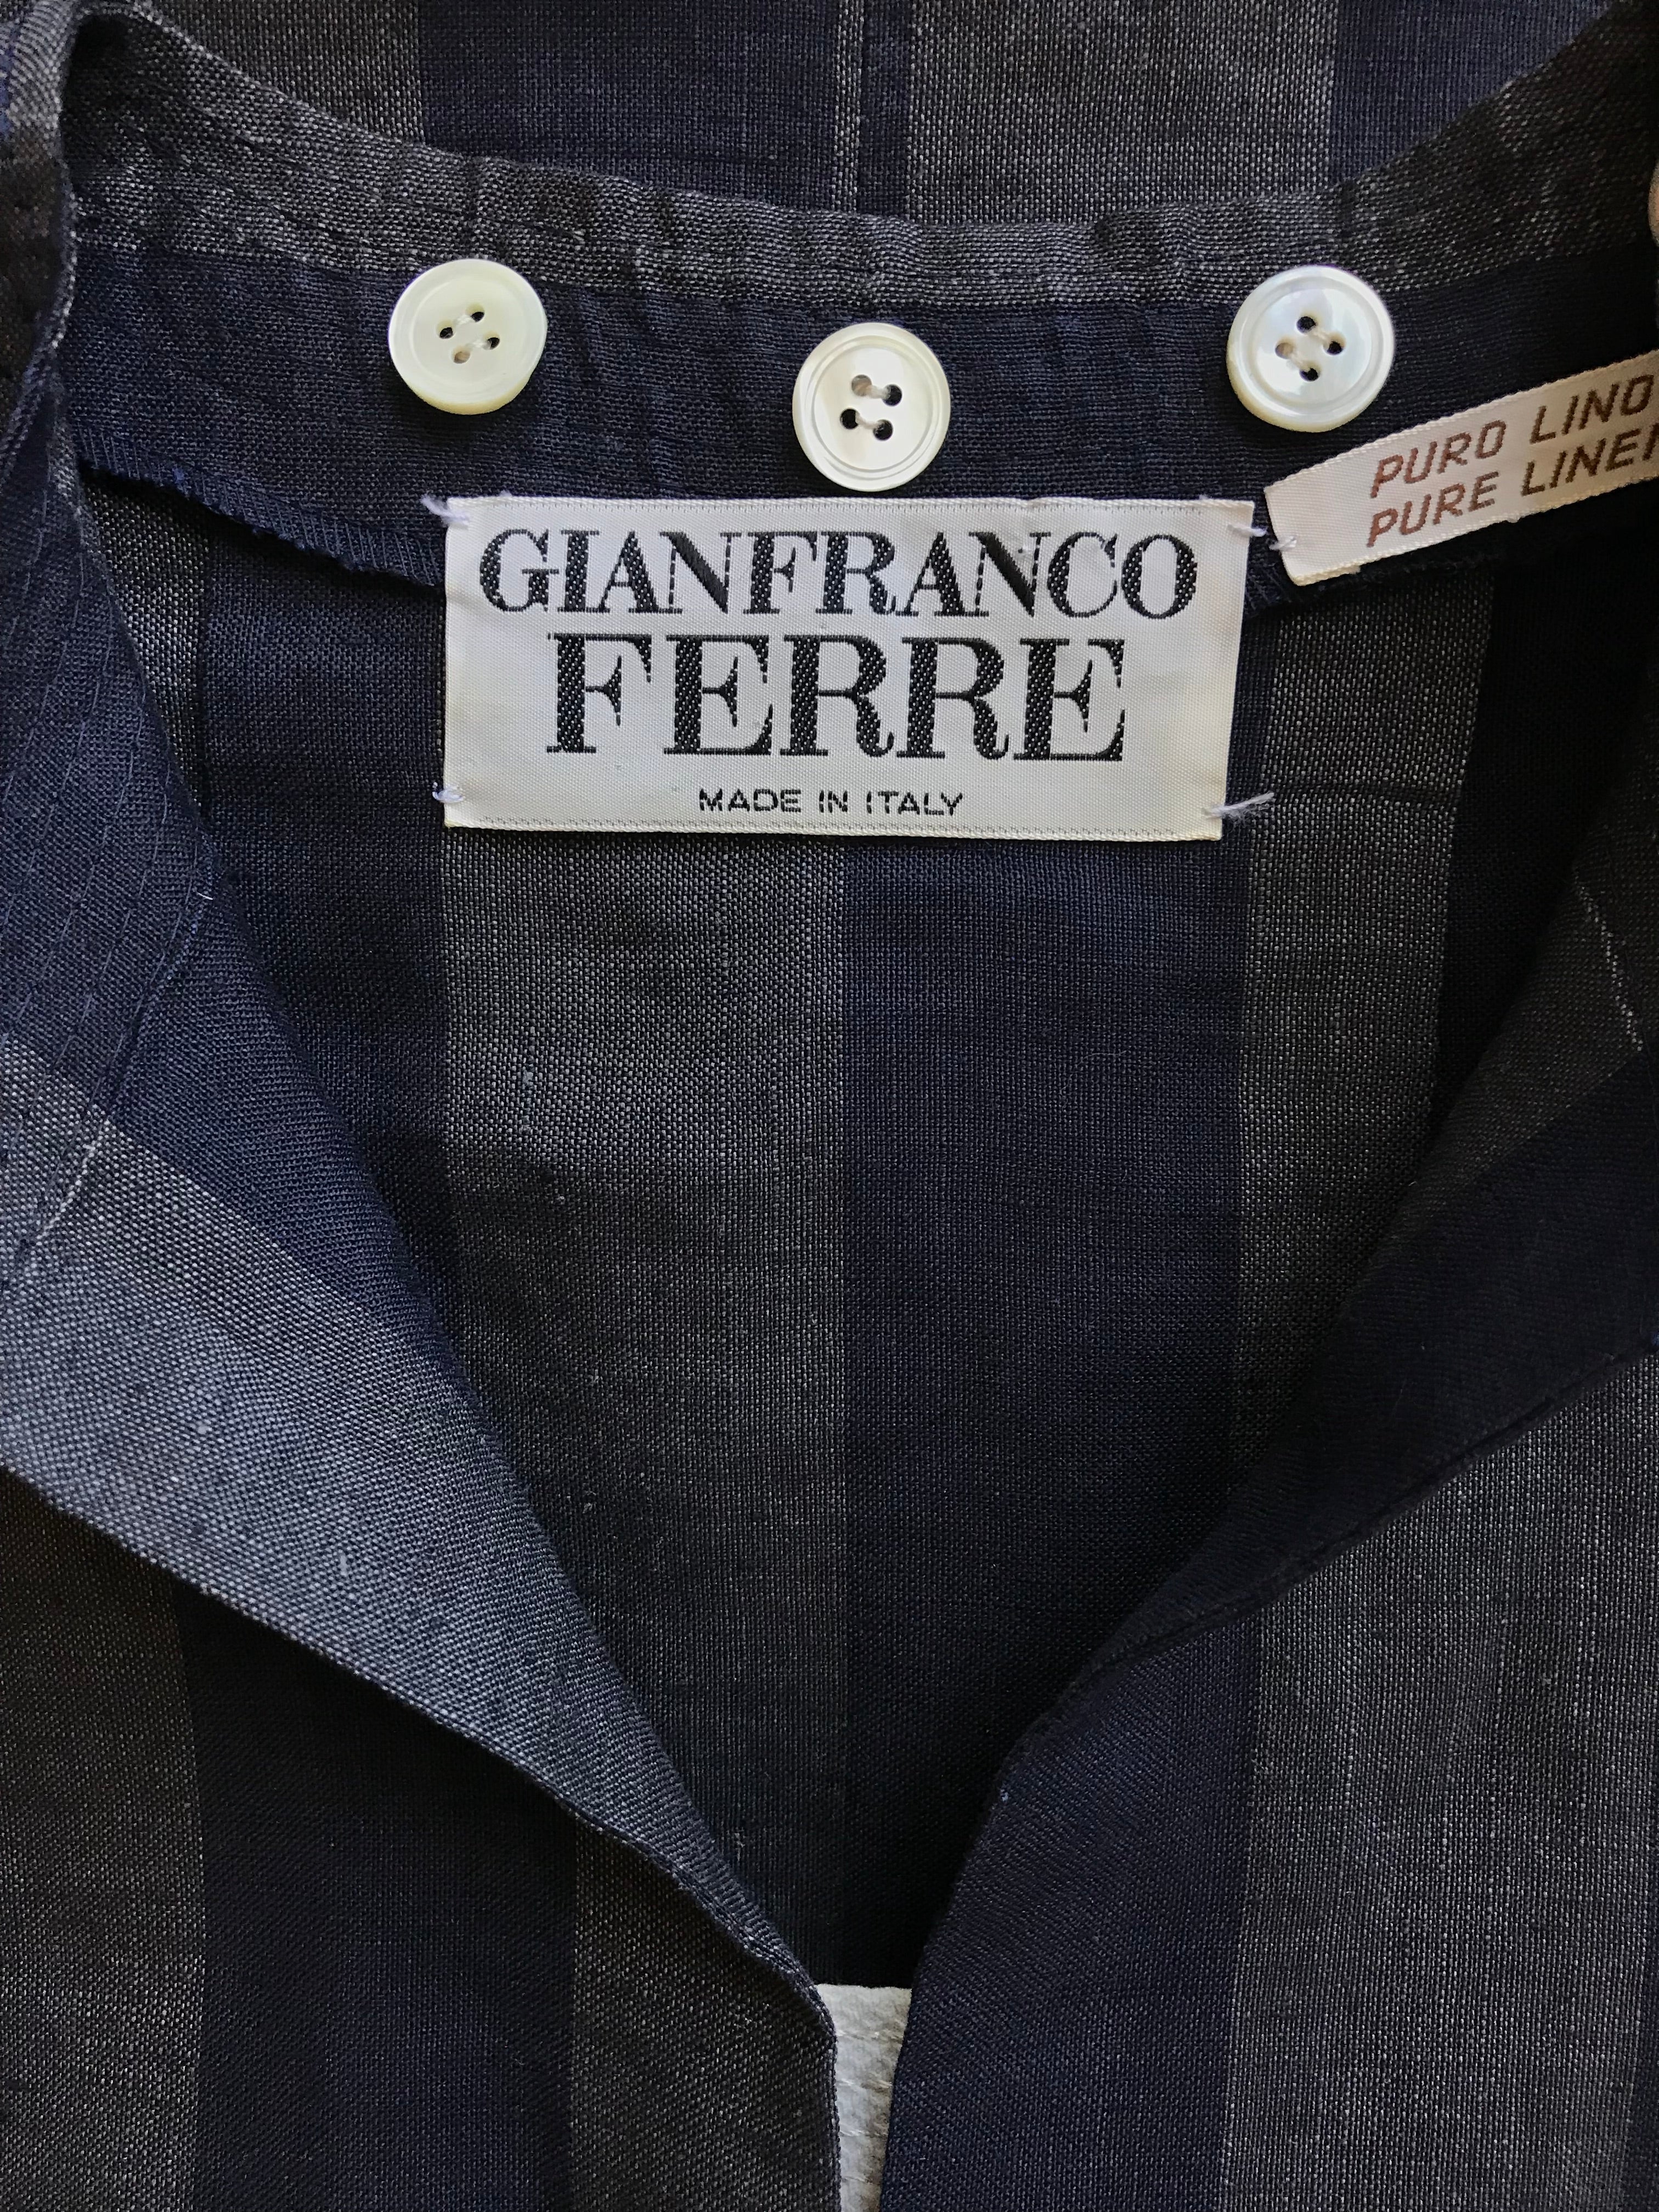 Gianfranco Ferre 1980s Vintage Striped Pure Linen Day Dress ...